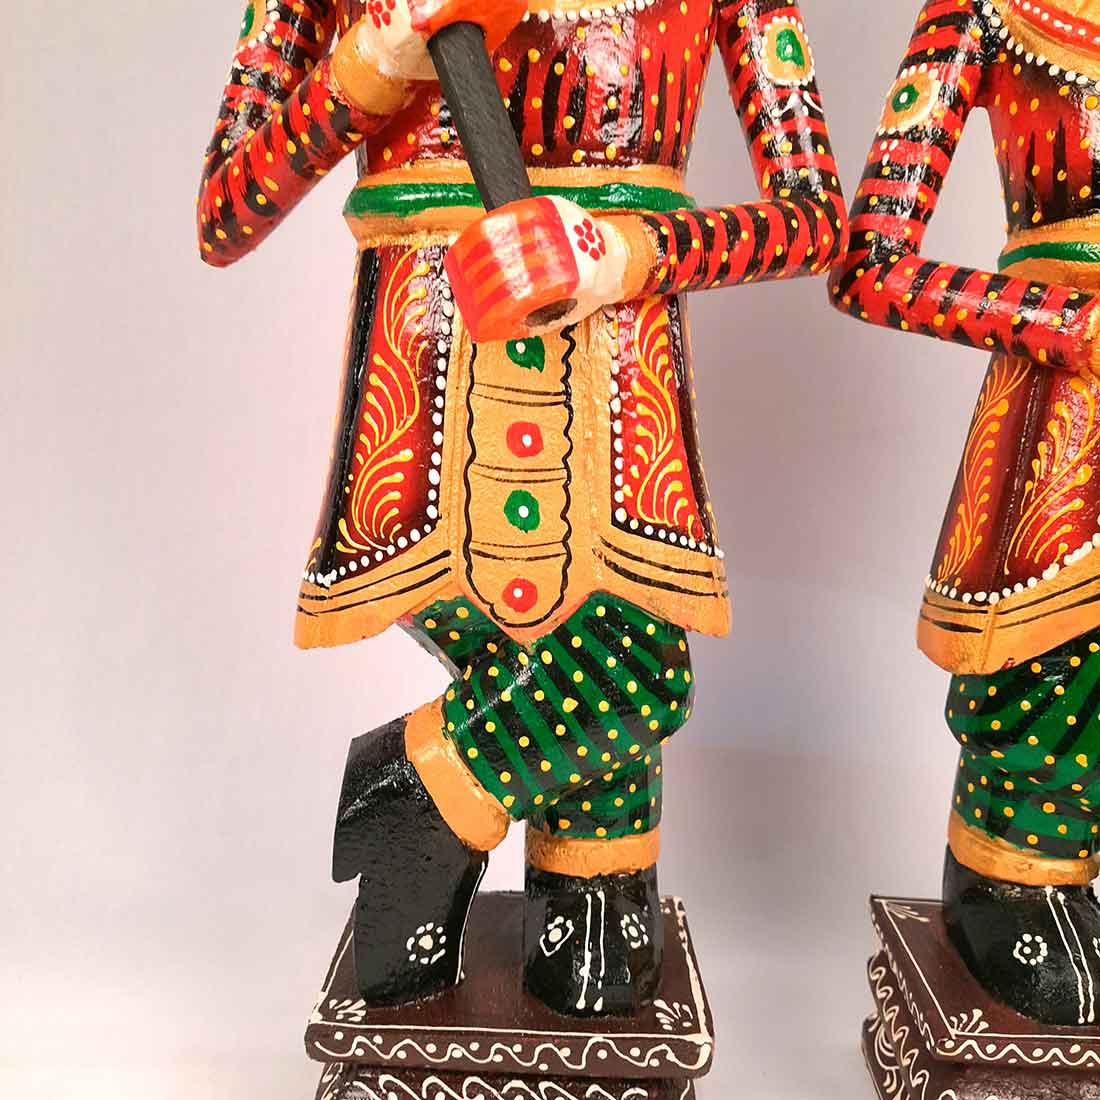 Darbaan Set Showpiece - Human Figurines - for Living Room & Home Decor - 24 Inch